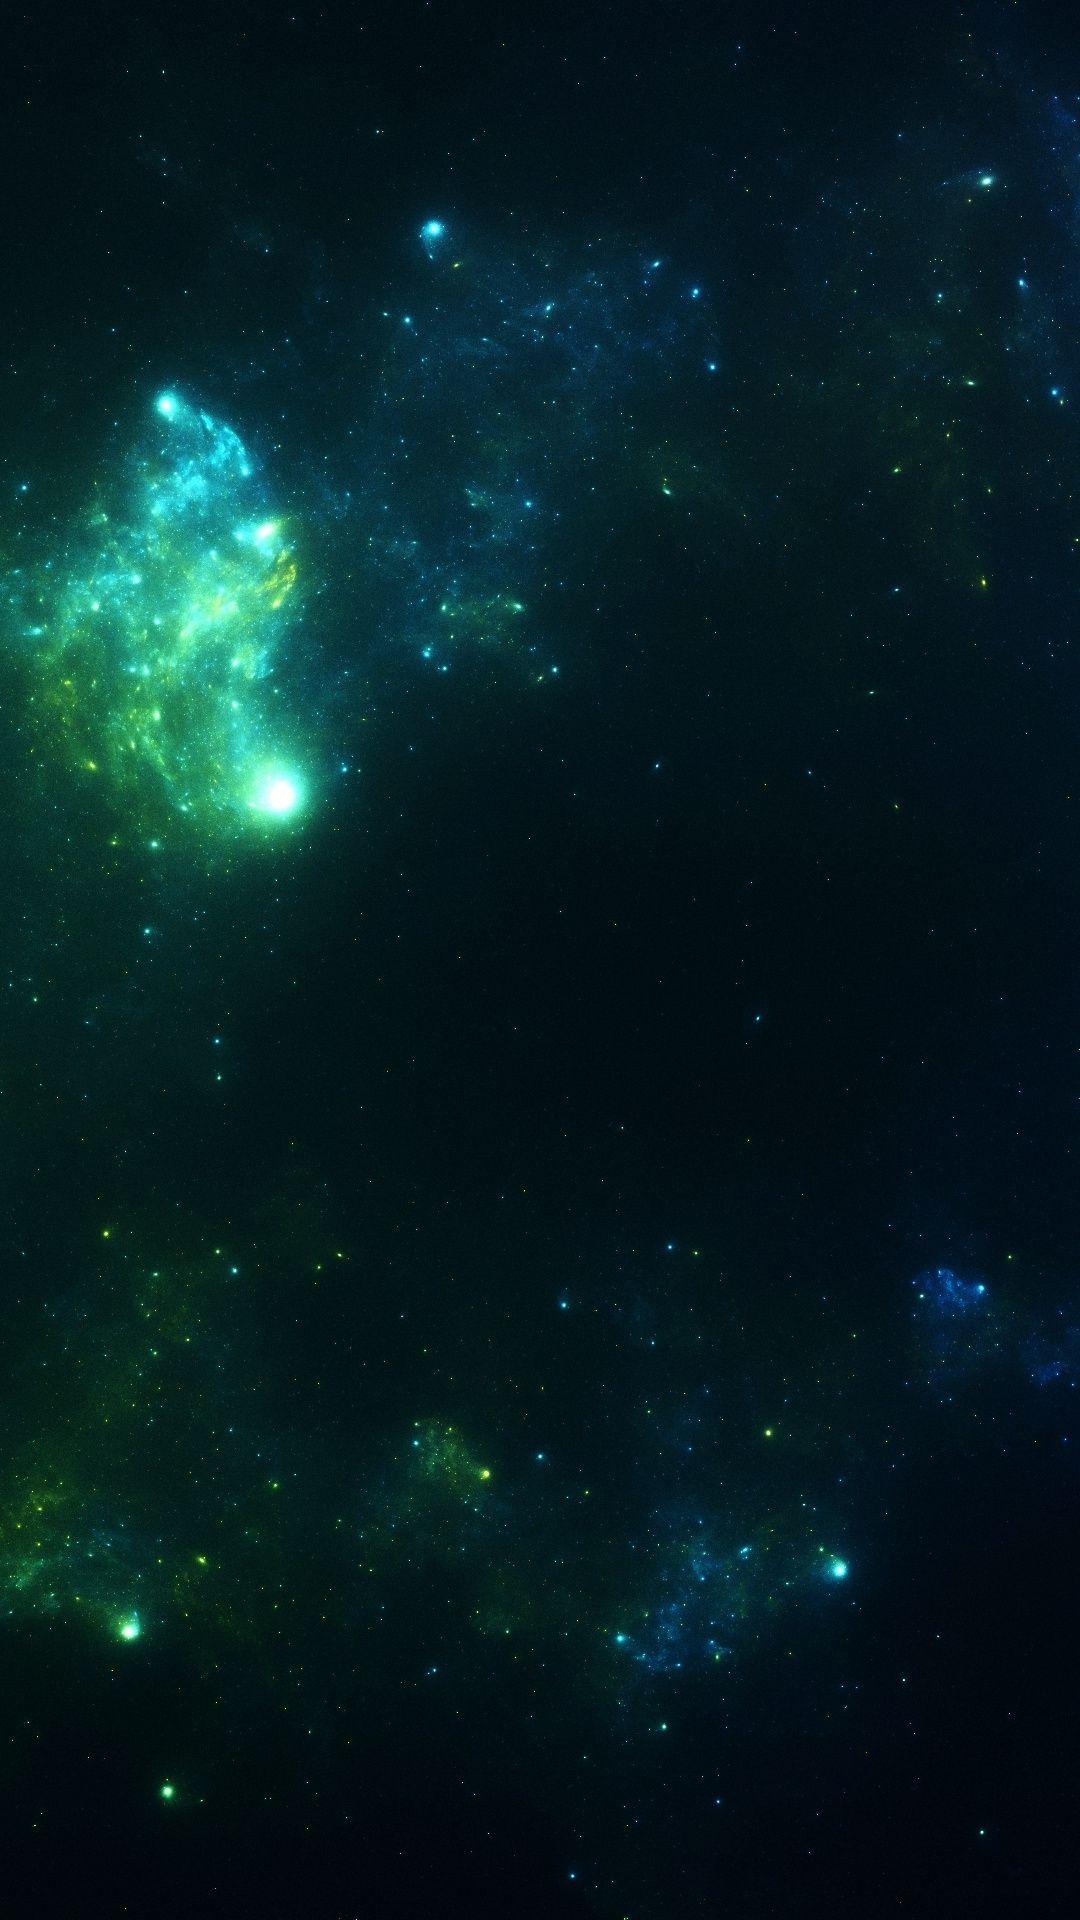 Blue Green Nebula Glow Space Galaxy Stars 4K HD Space Wallpapers  HD  Wallpapers  ID 110936